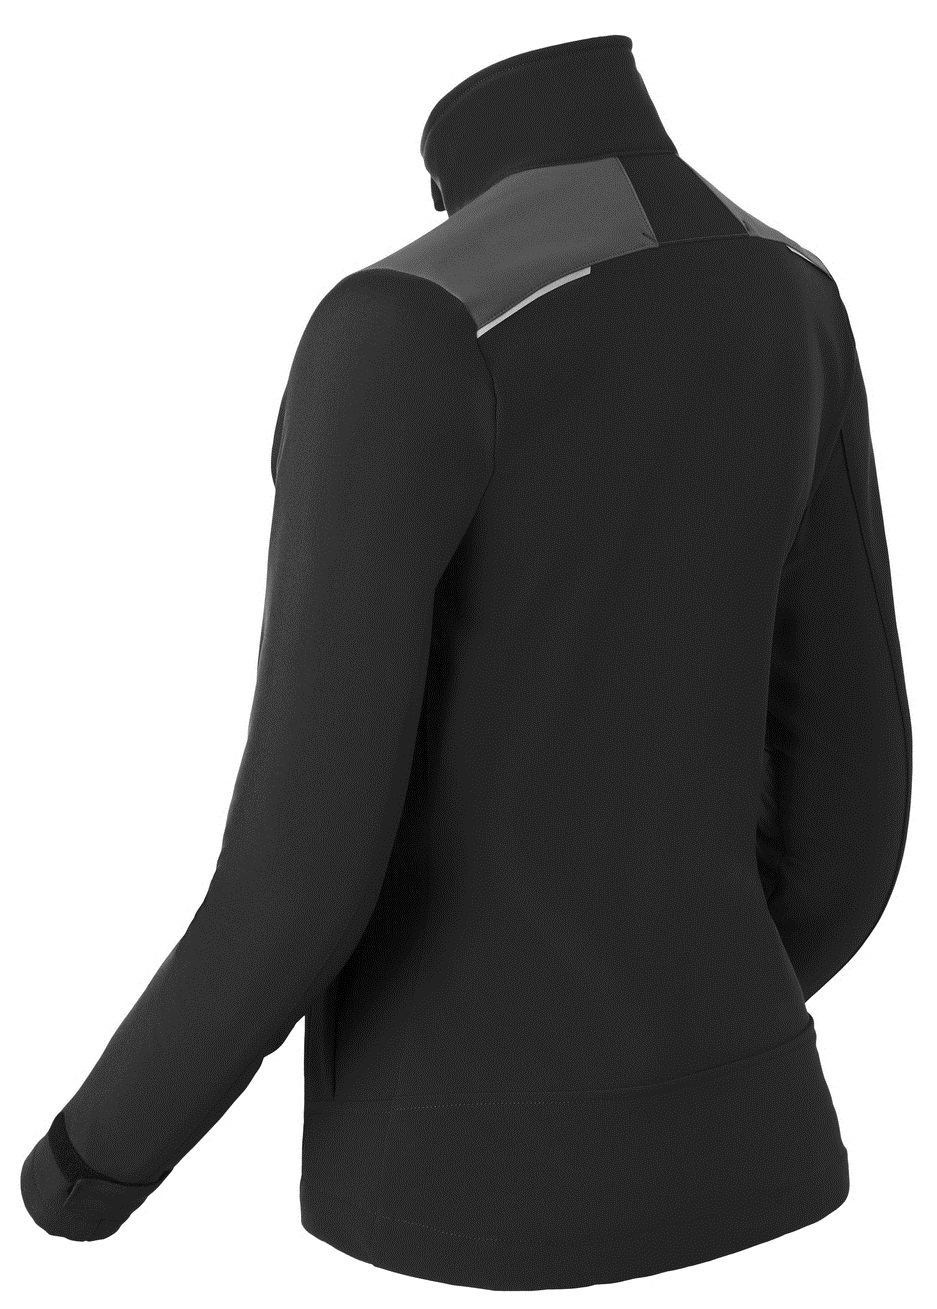 HAVEP-Kälteschutz, Damen-Softshell Jacke, schwarz/kohlengrau
